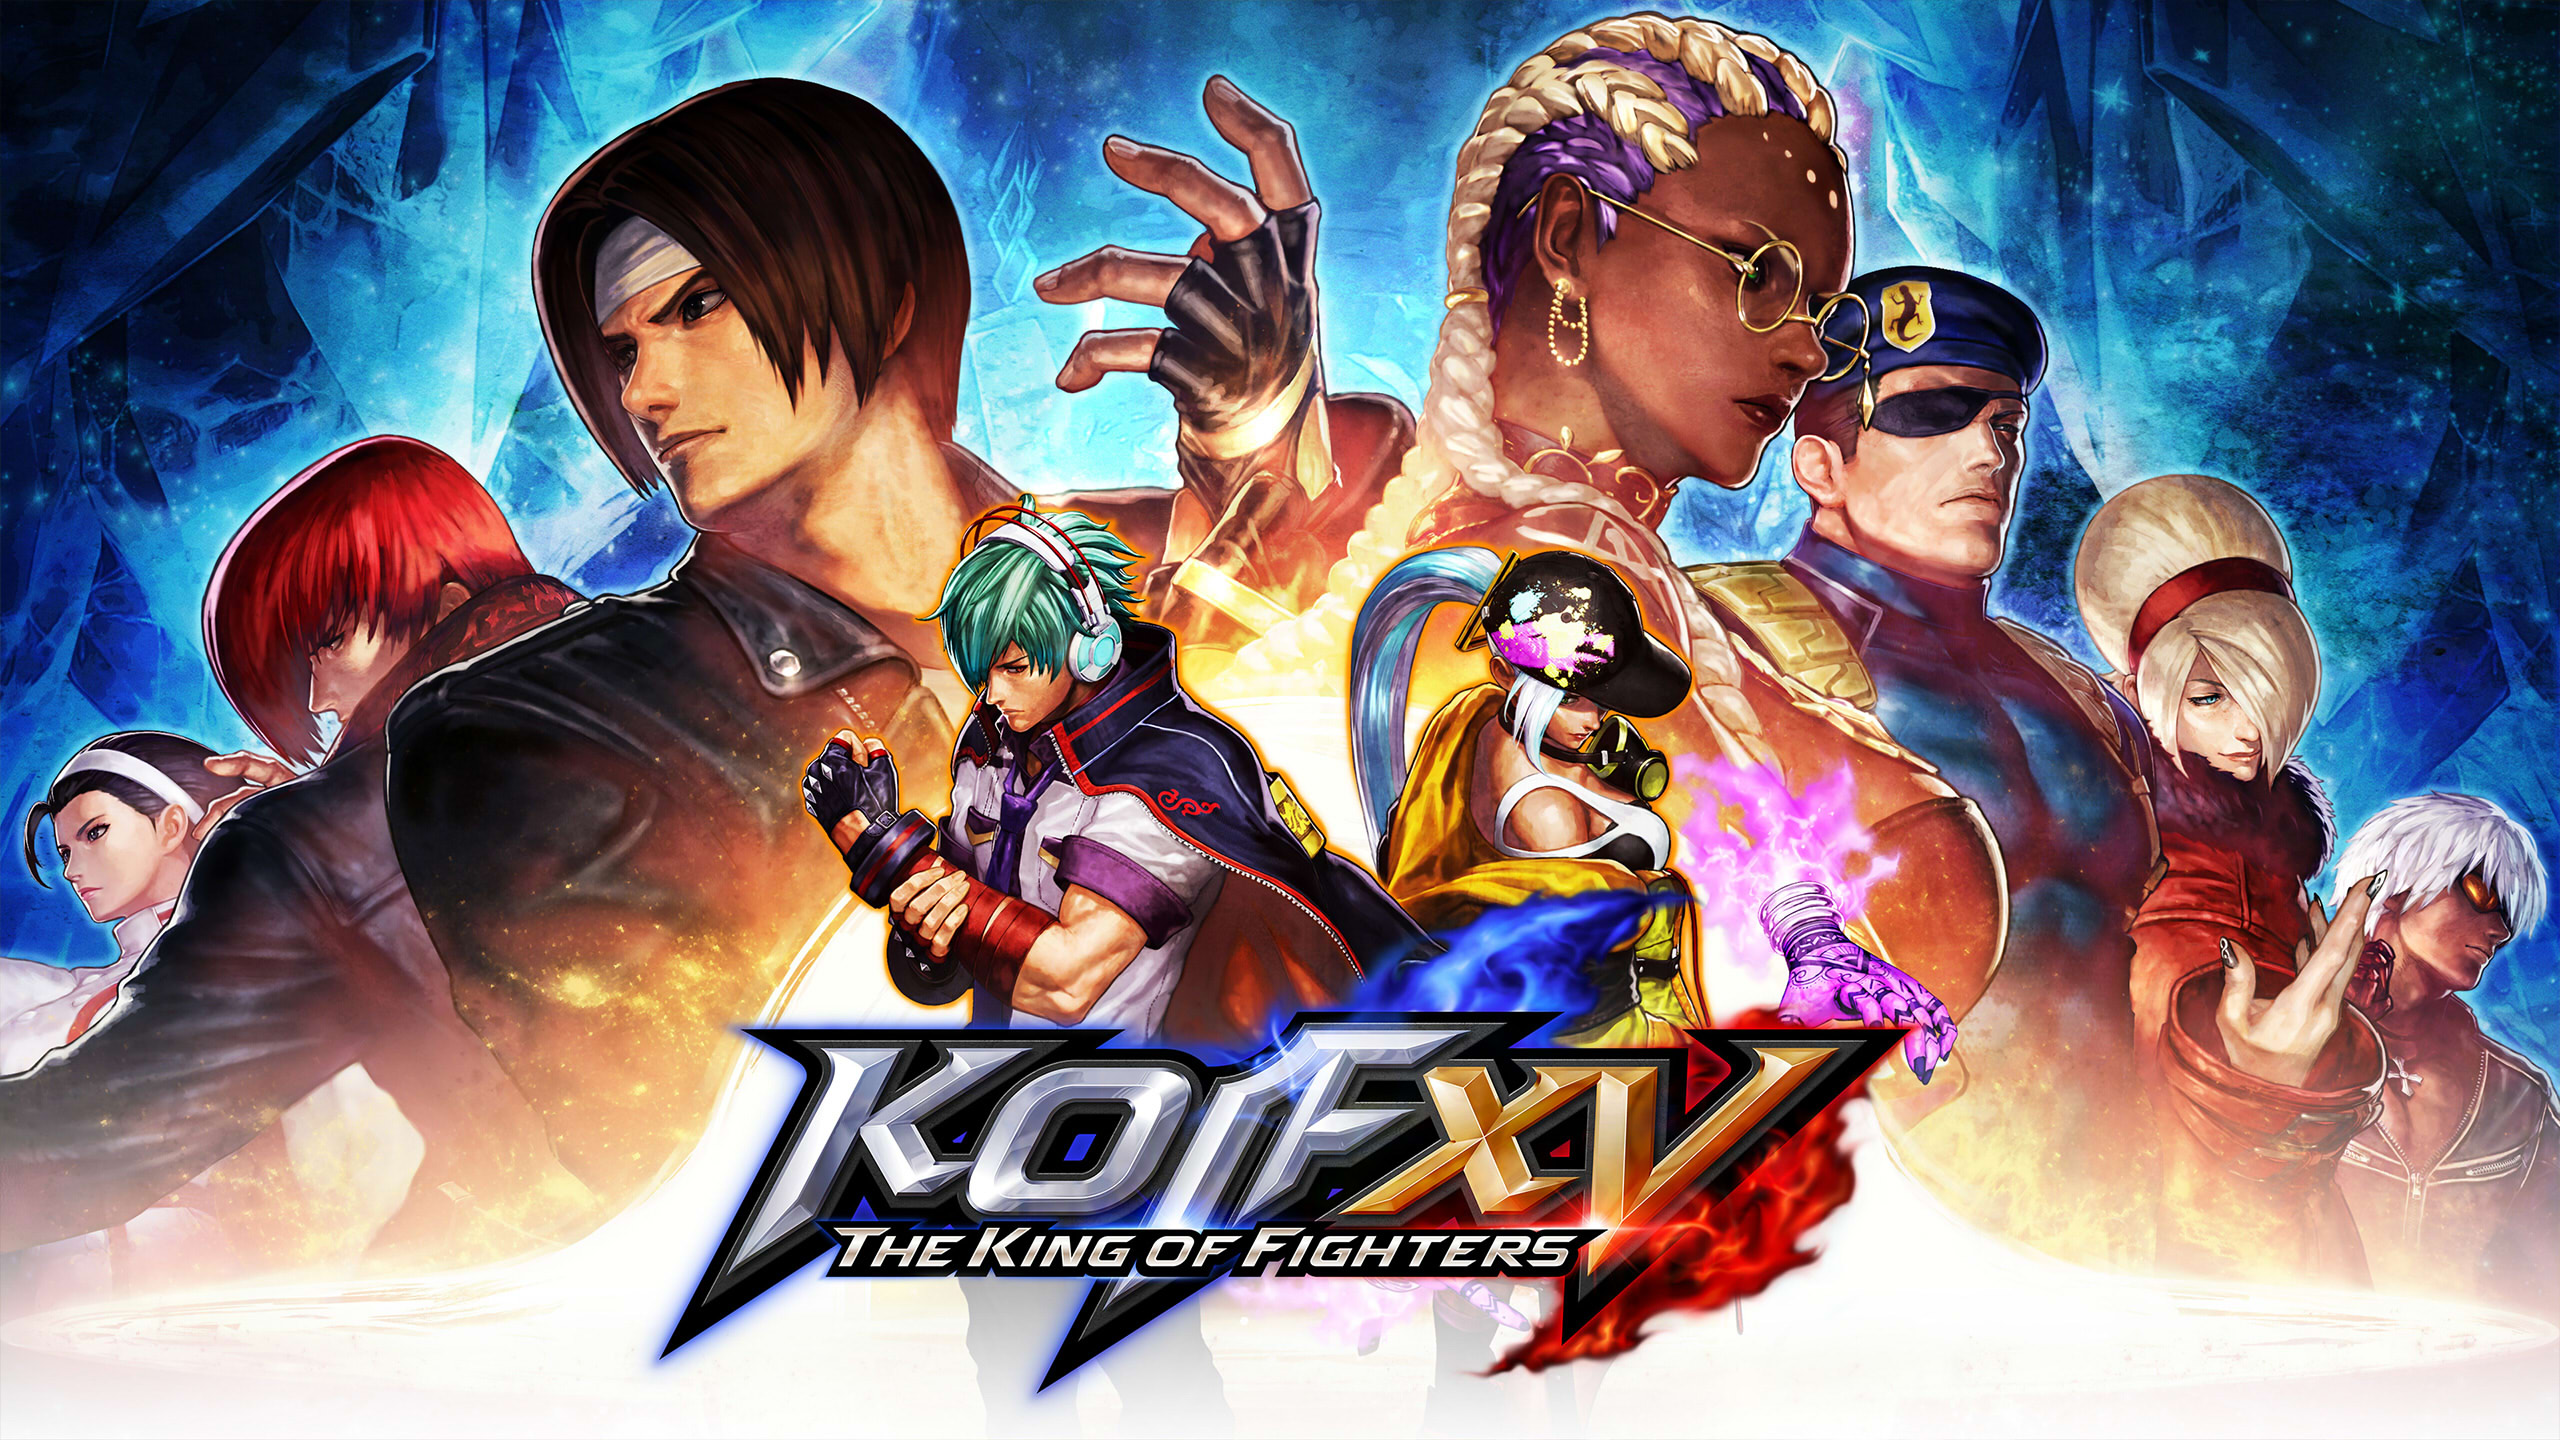 Файтинг The King of Fighters XV можно будет опробовать бесплатно на Xbox: с сайта NEWXBOXONE.RU